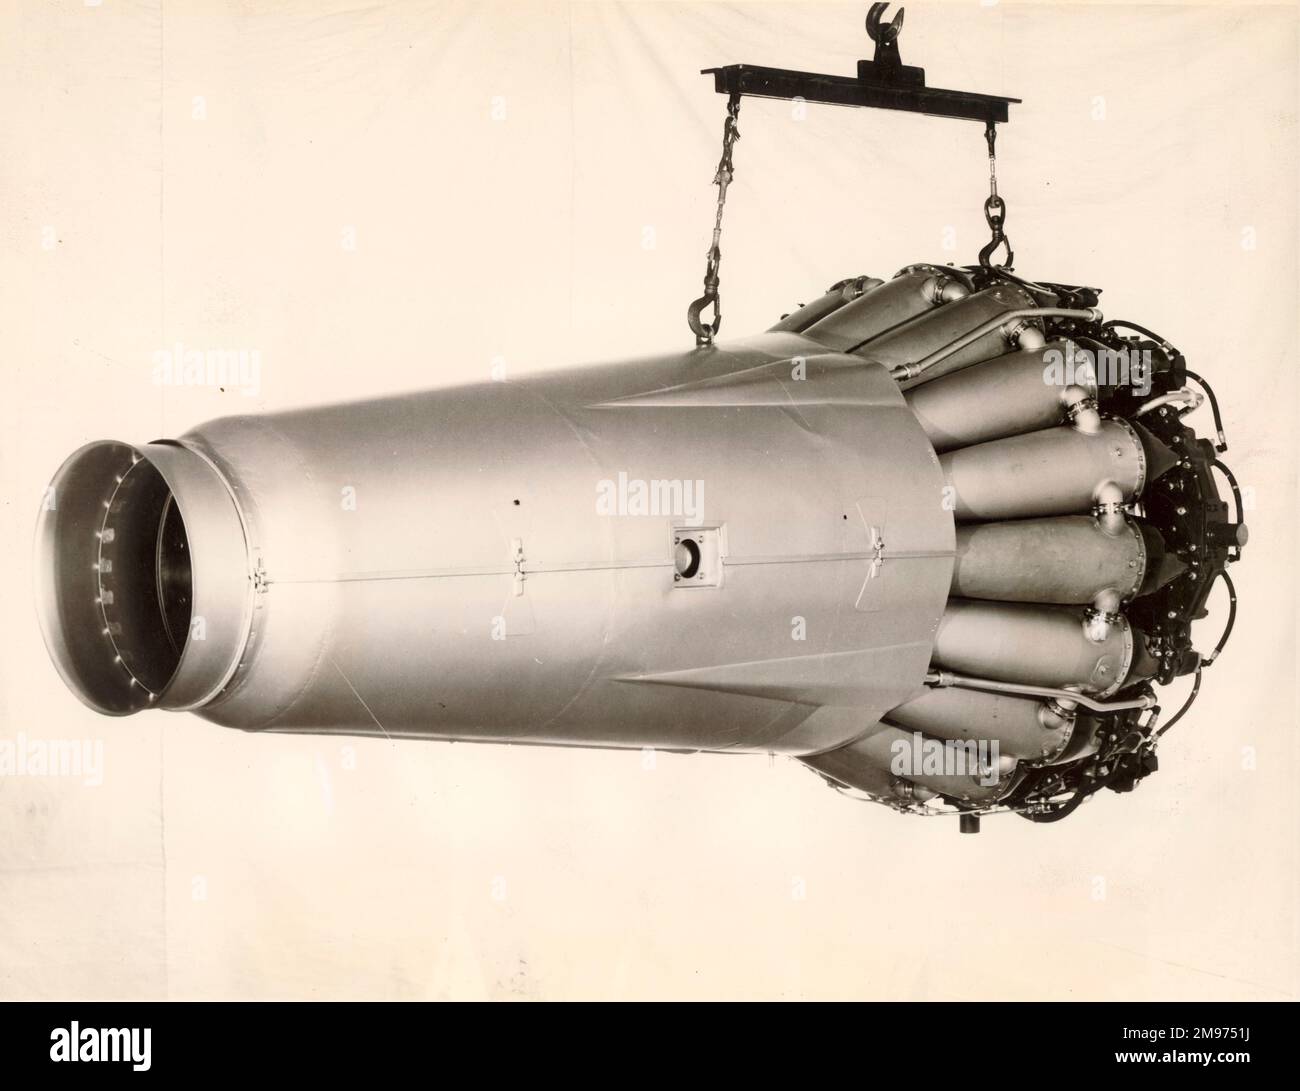 de Havilland Goblin turbojet. Stock Photo